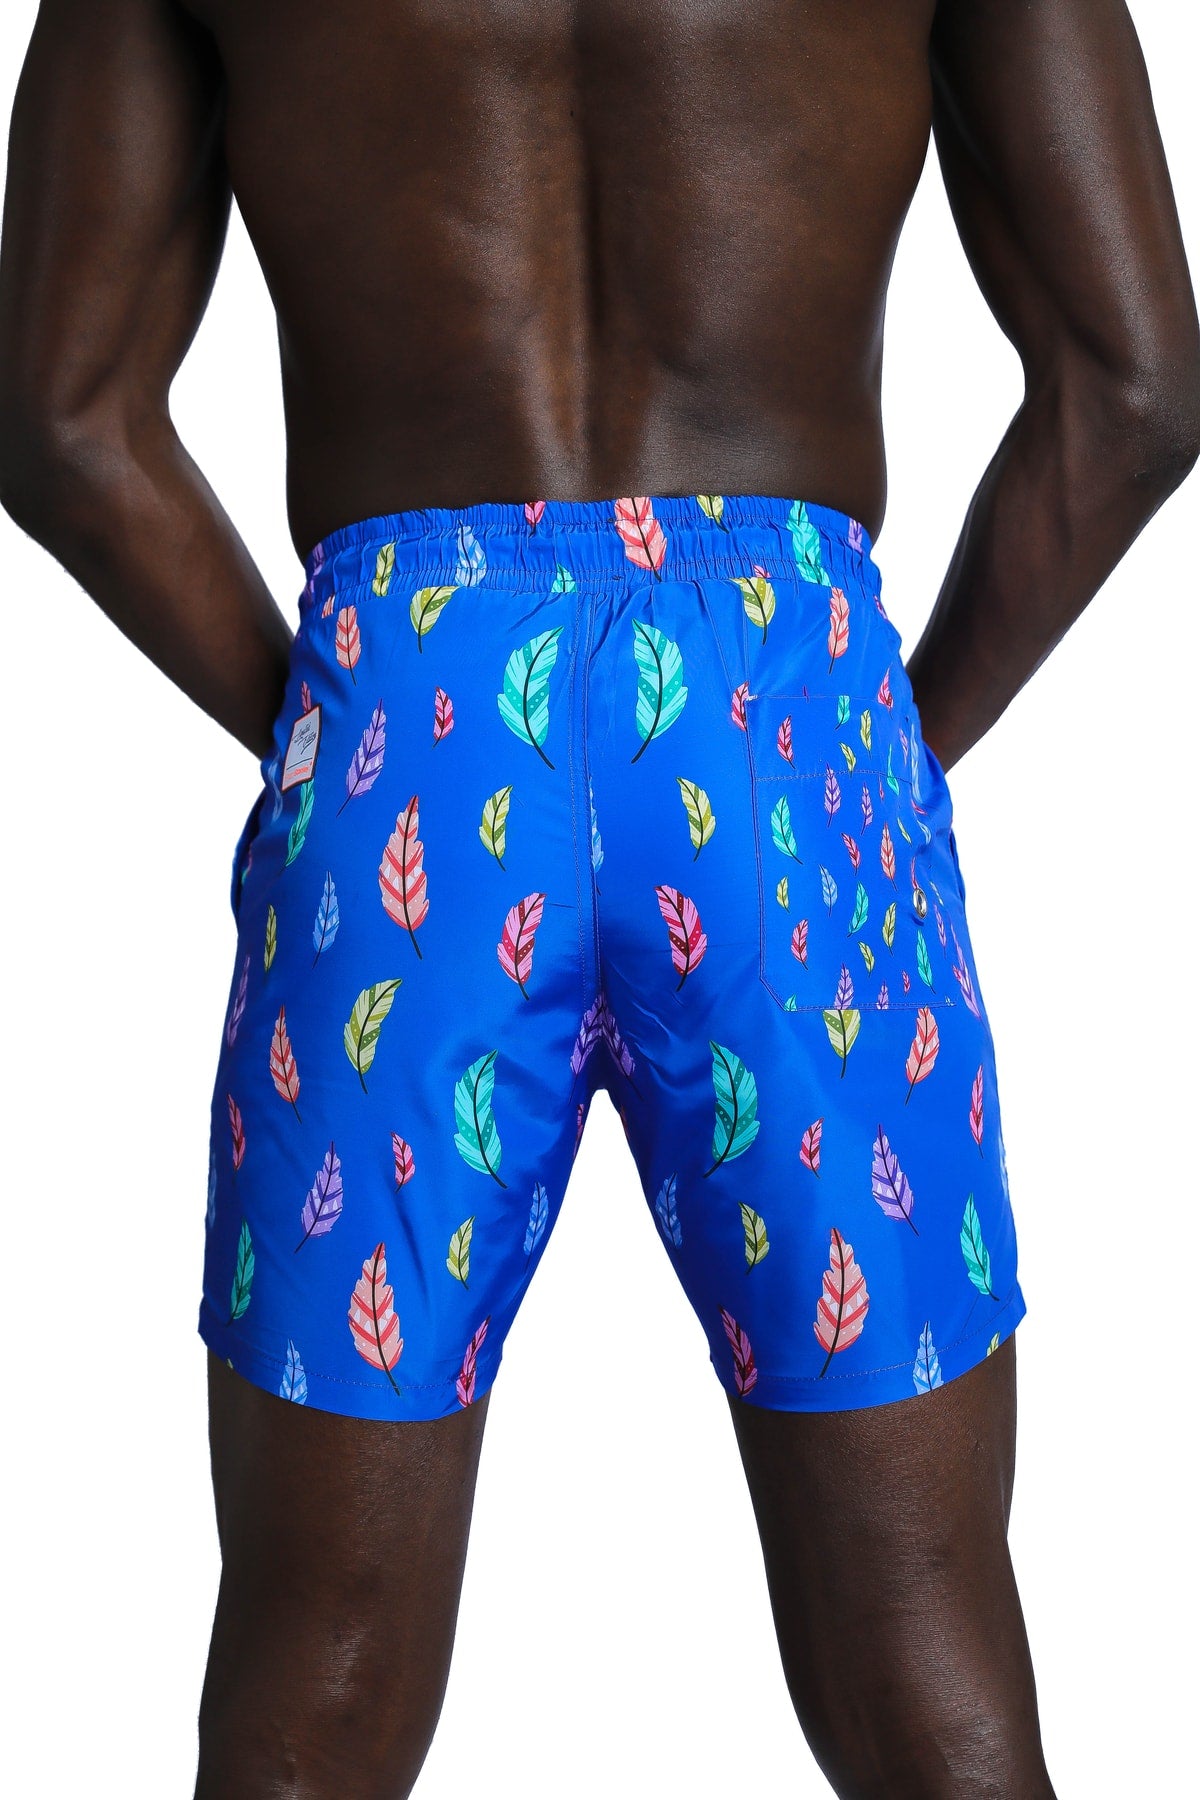 Men's Patterned Blue Sea Shorts